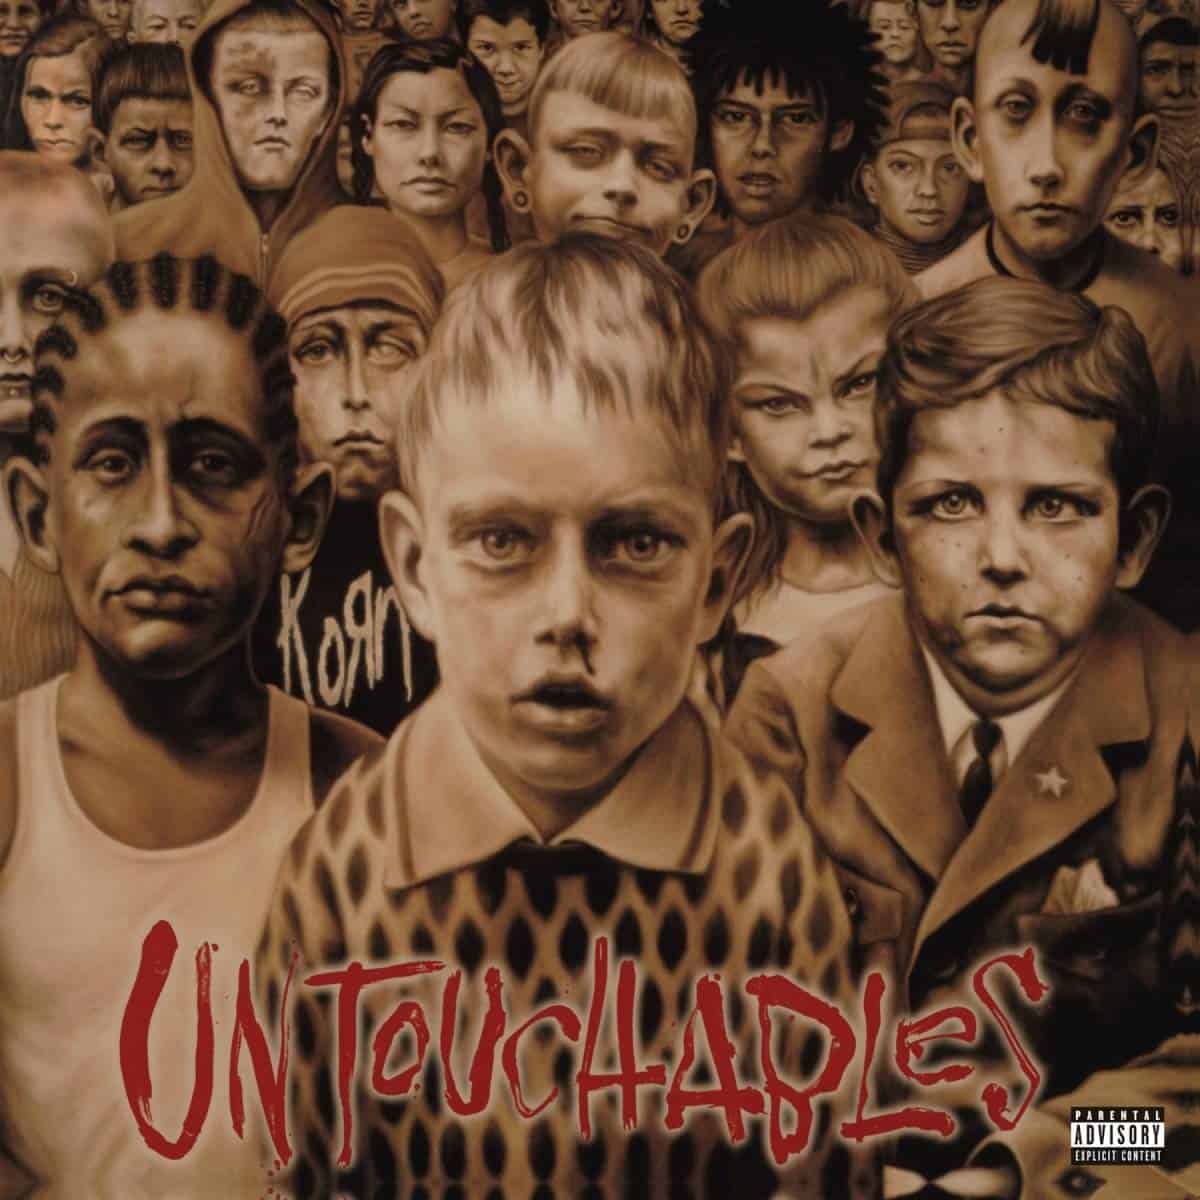 Korn-Untouchables-vinyl-record-album-front